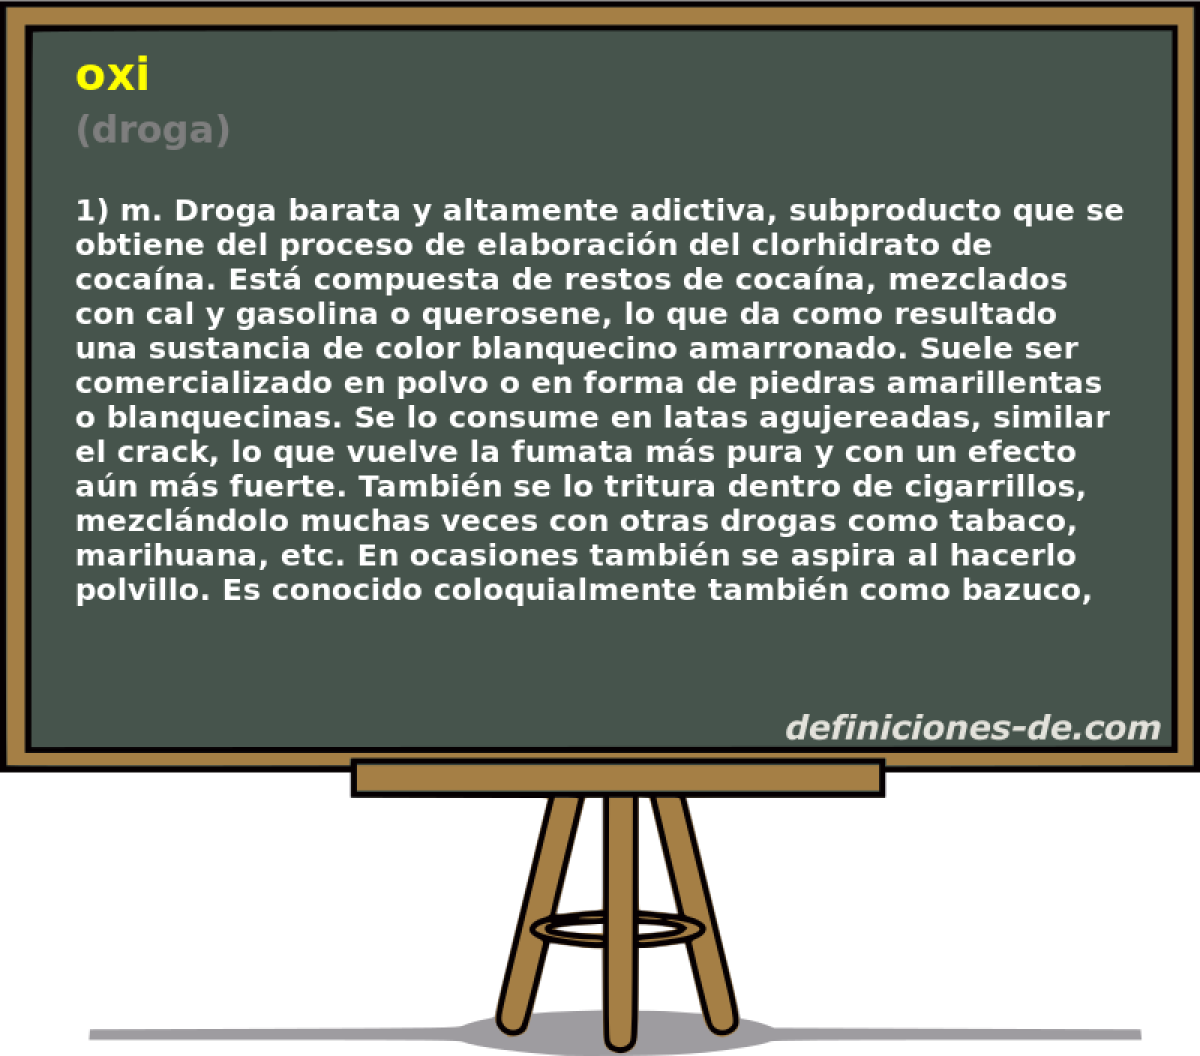 oxi (droga)